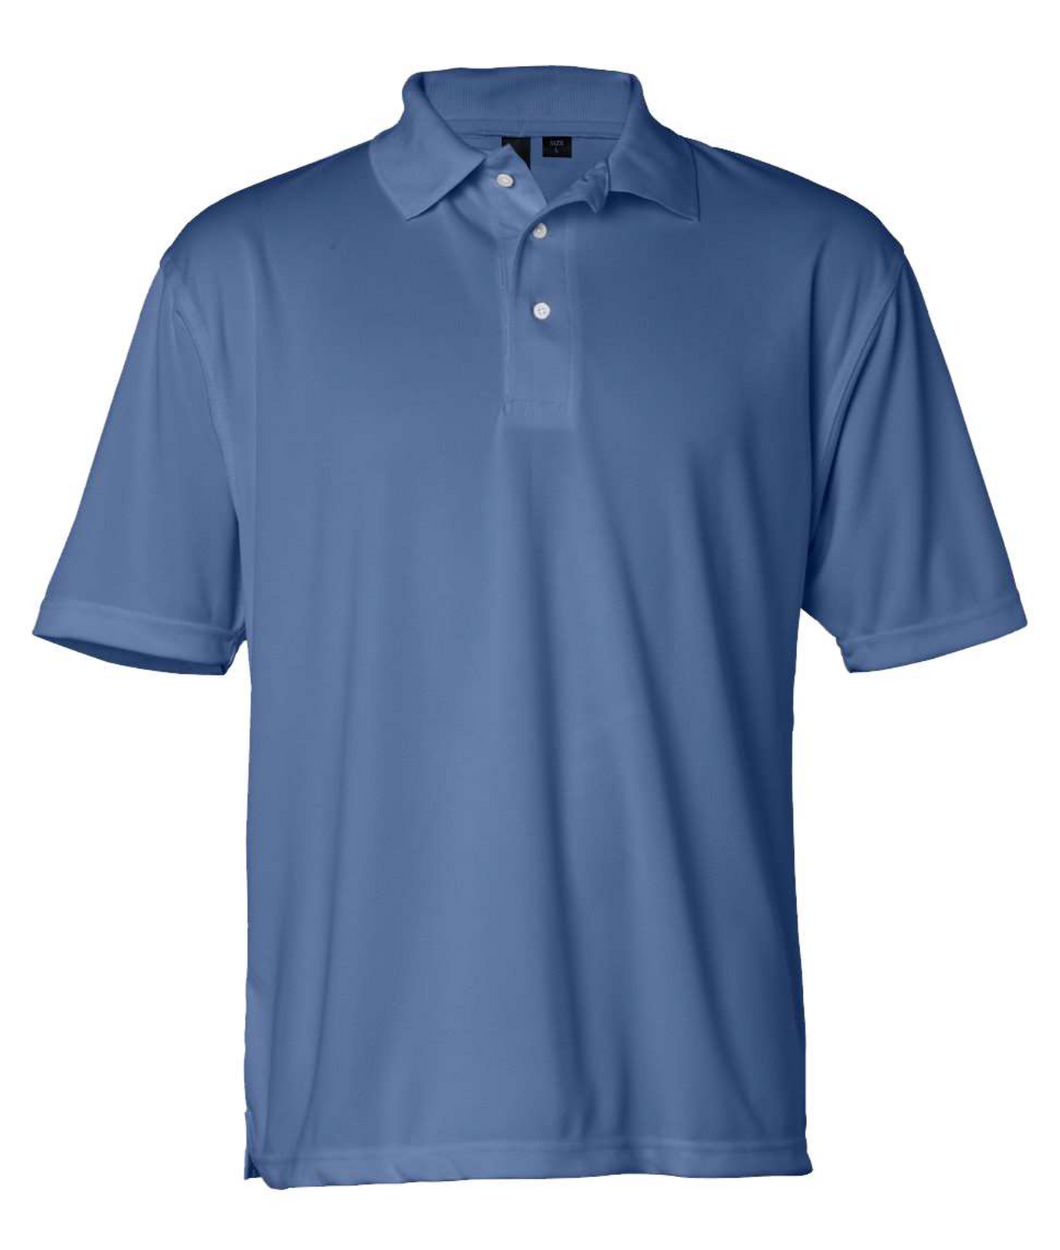 Men's Arrowhead Golf/Sports Polo: Moisture Free Mesh Light Blue